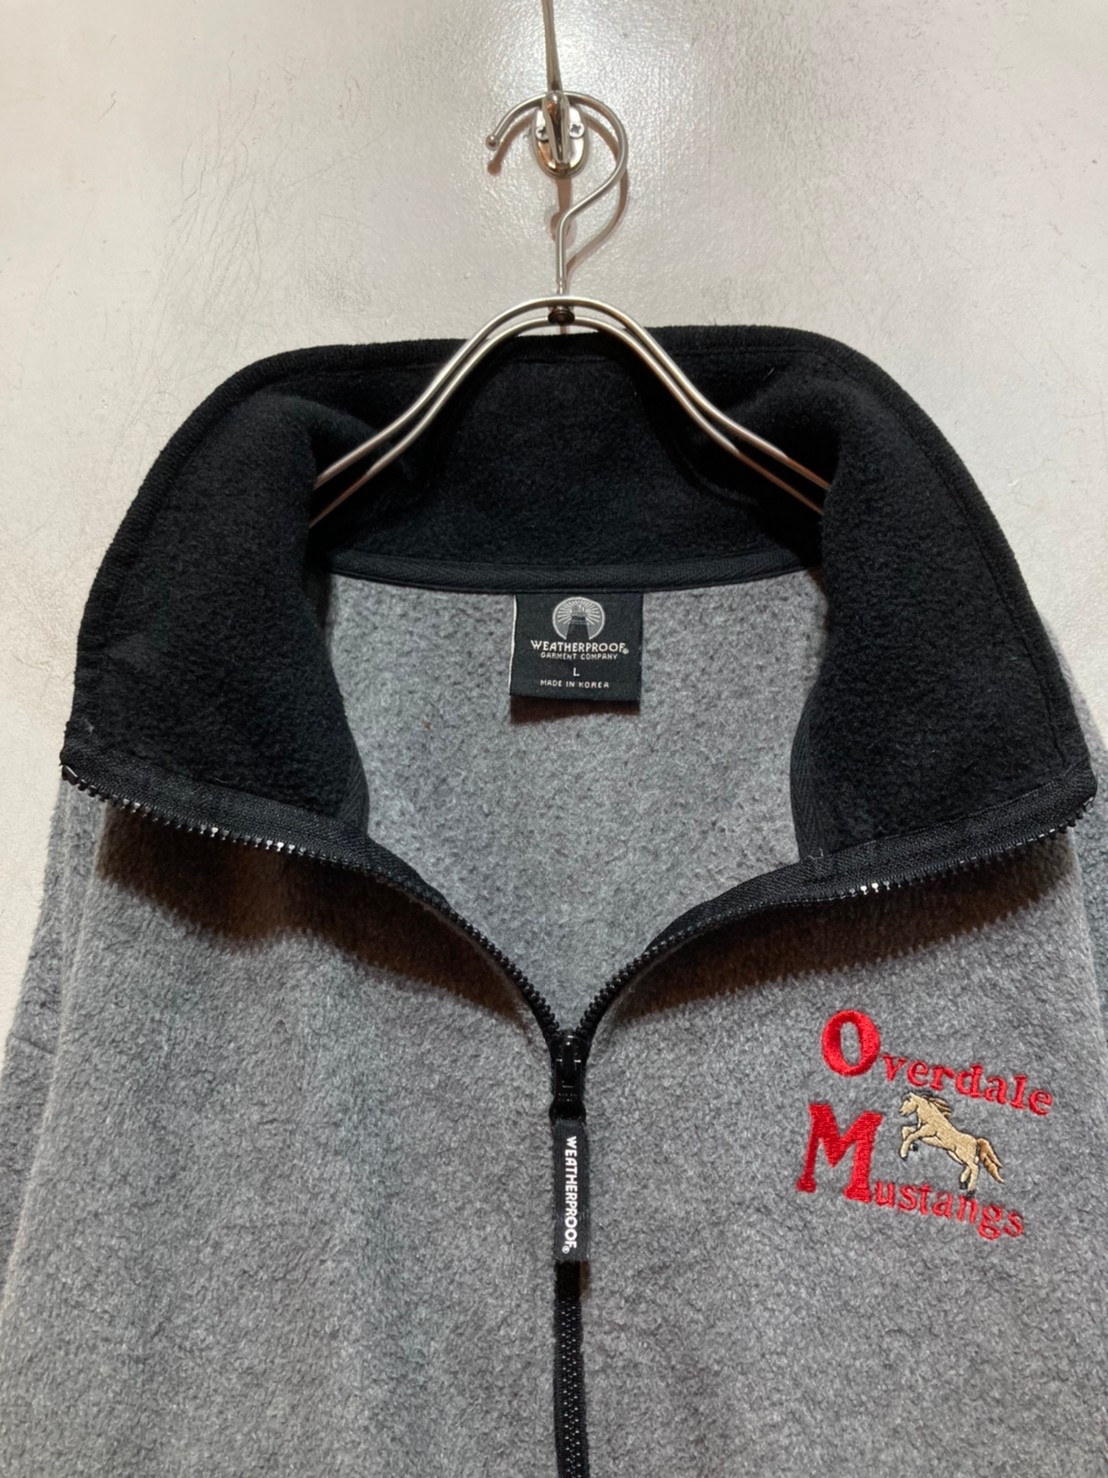 “Overdale Mustangs” Fleece Jacket